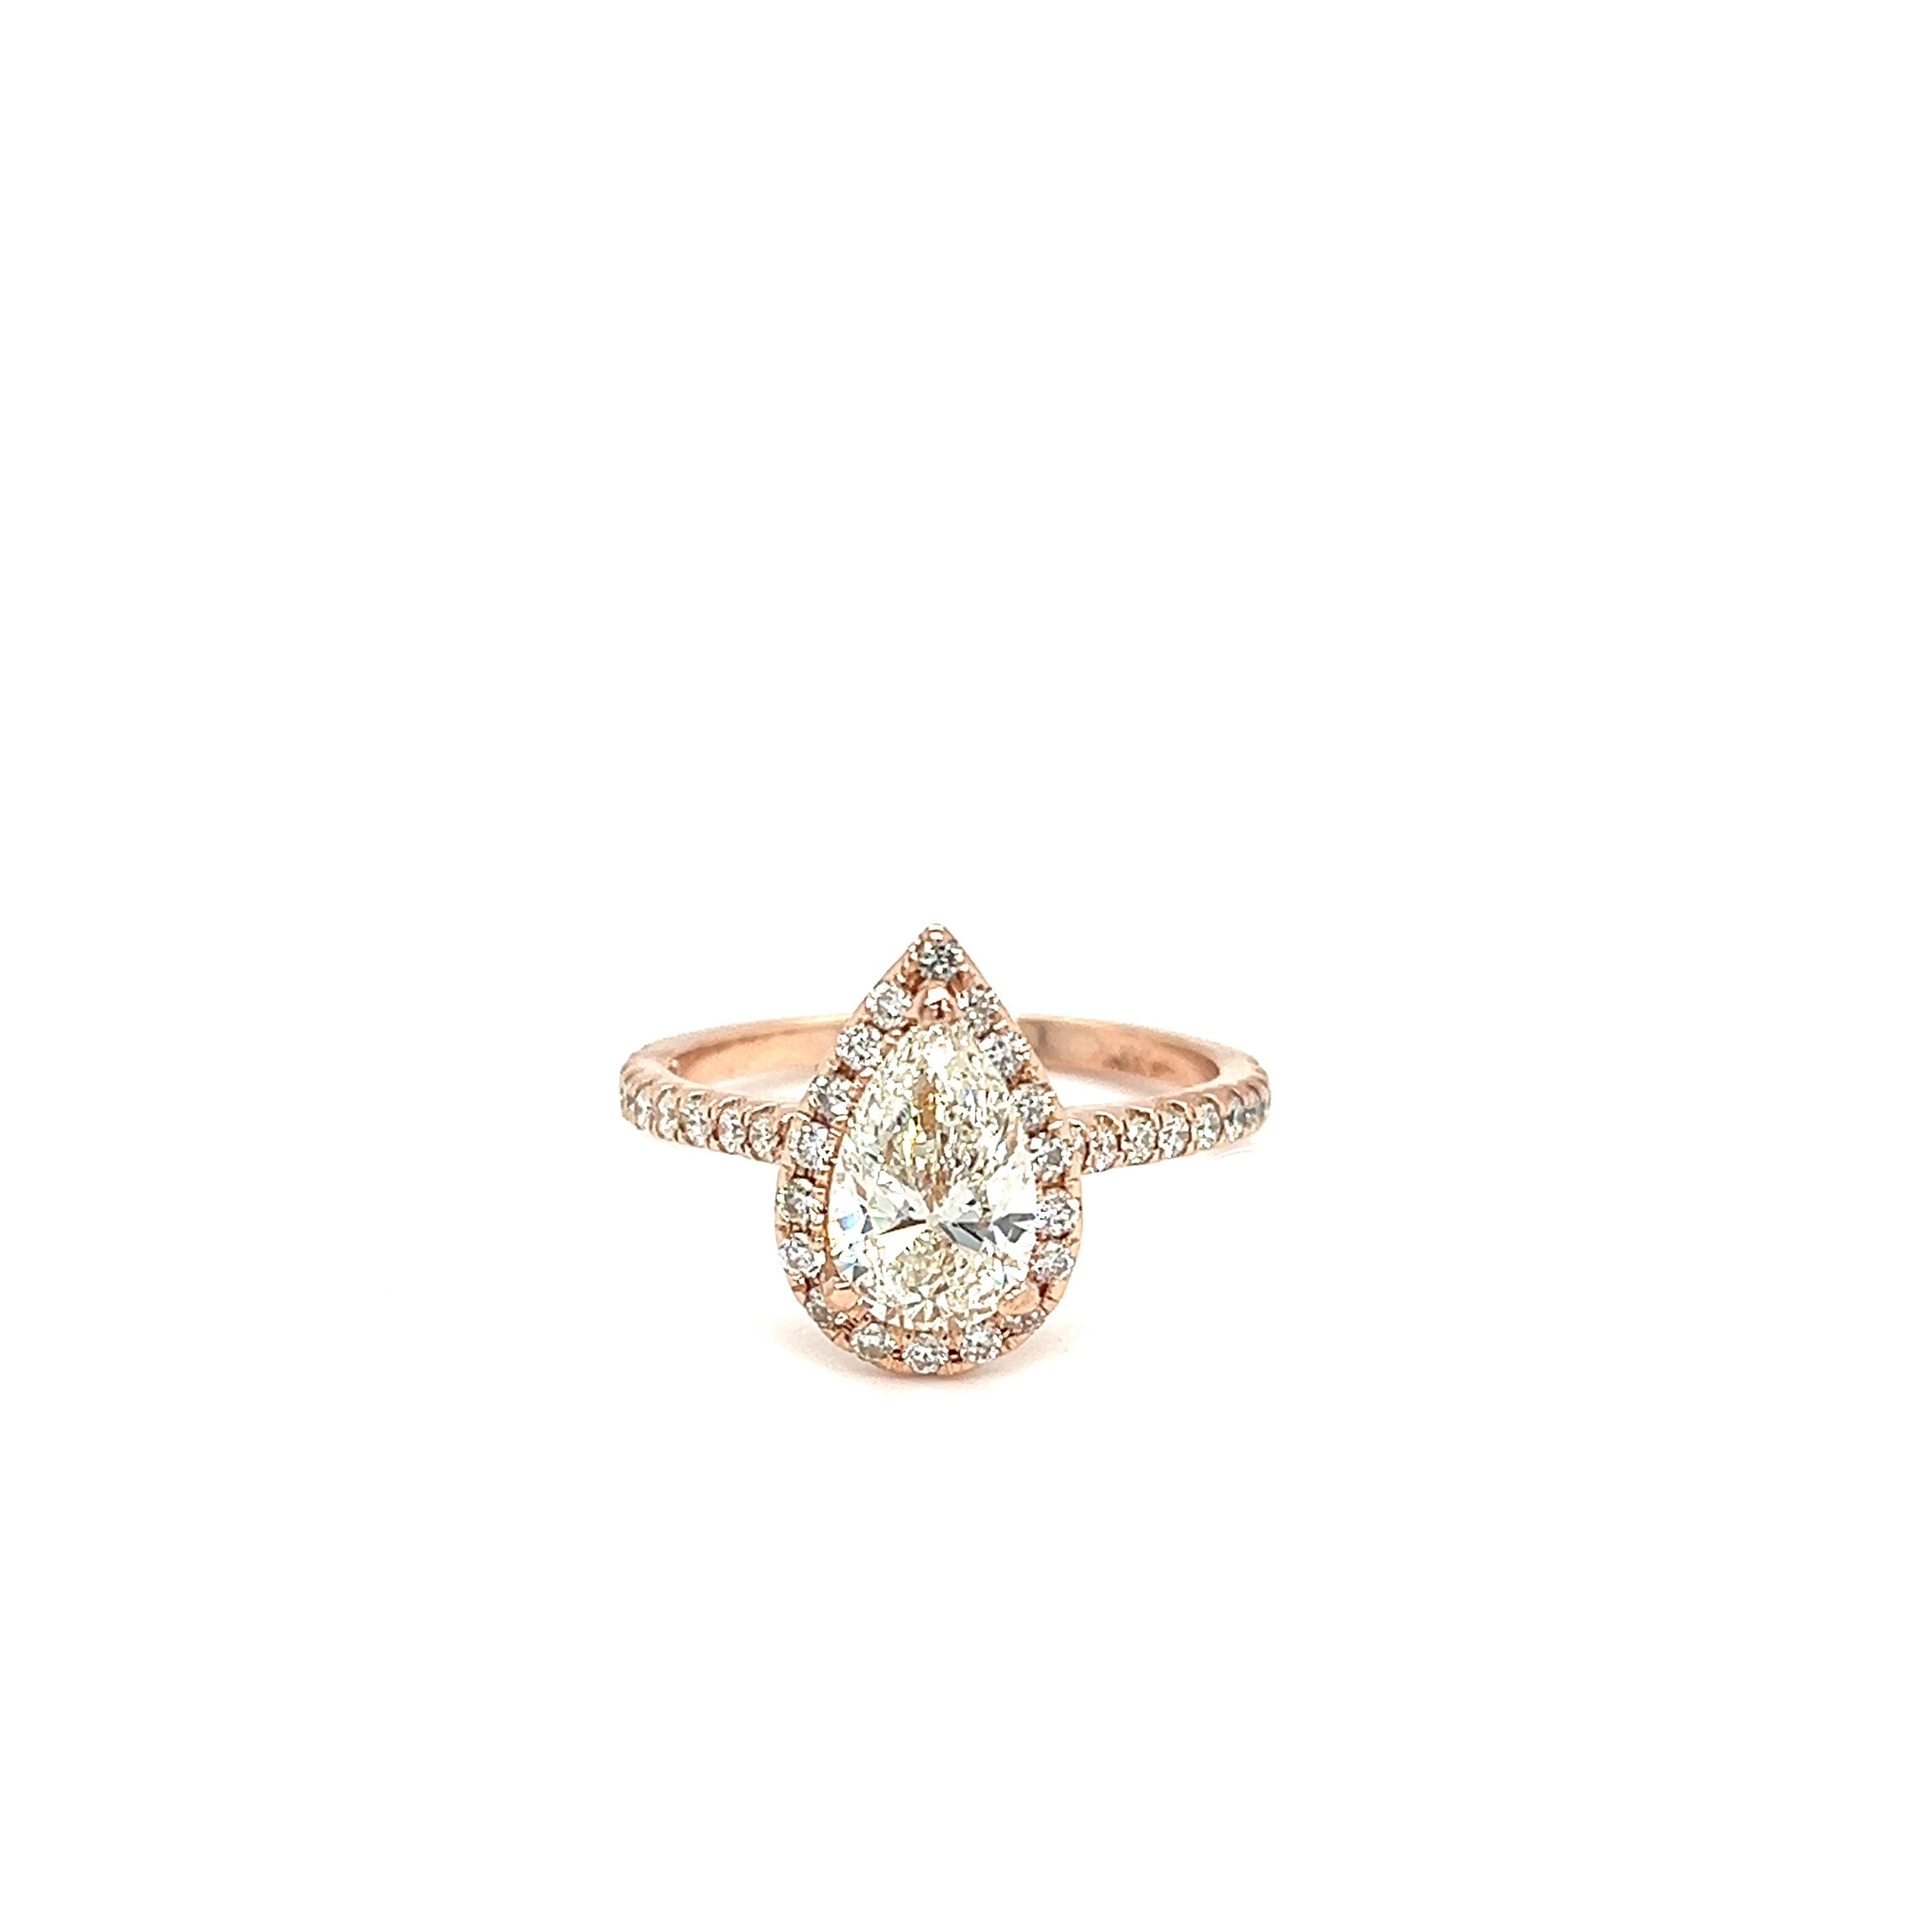 Rose Gold 14k Pear Diamond 1.25 ctw Engagement Ring | I&I Diamonds in Coconut Creek, FL